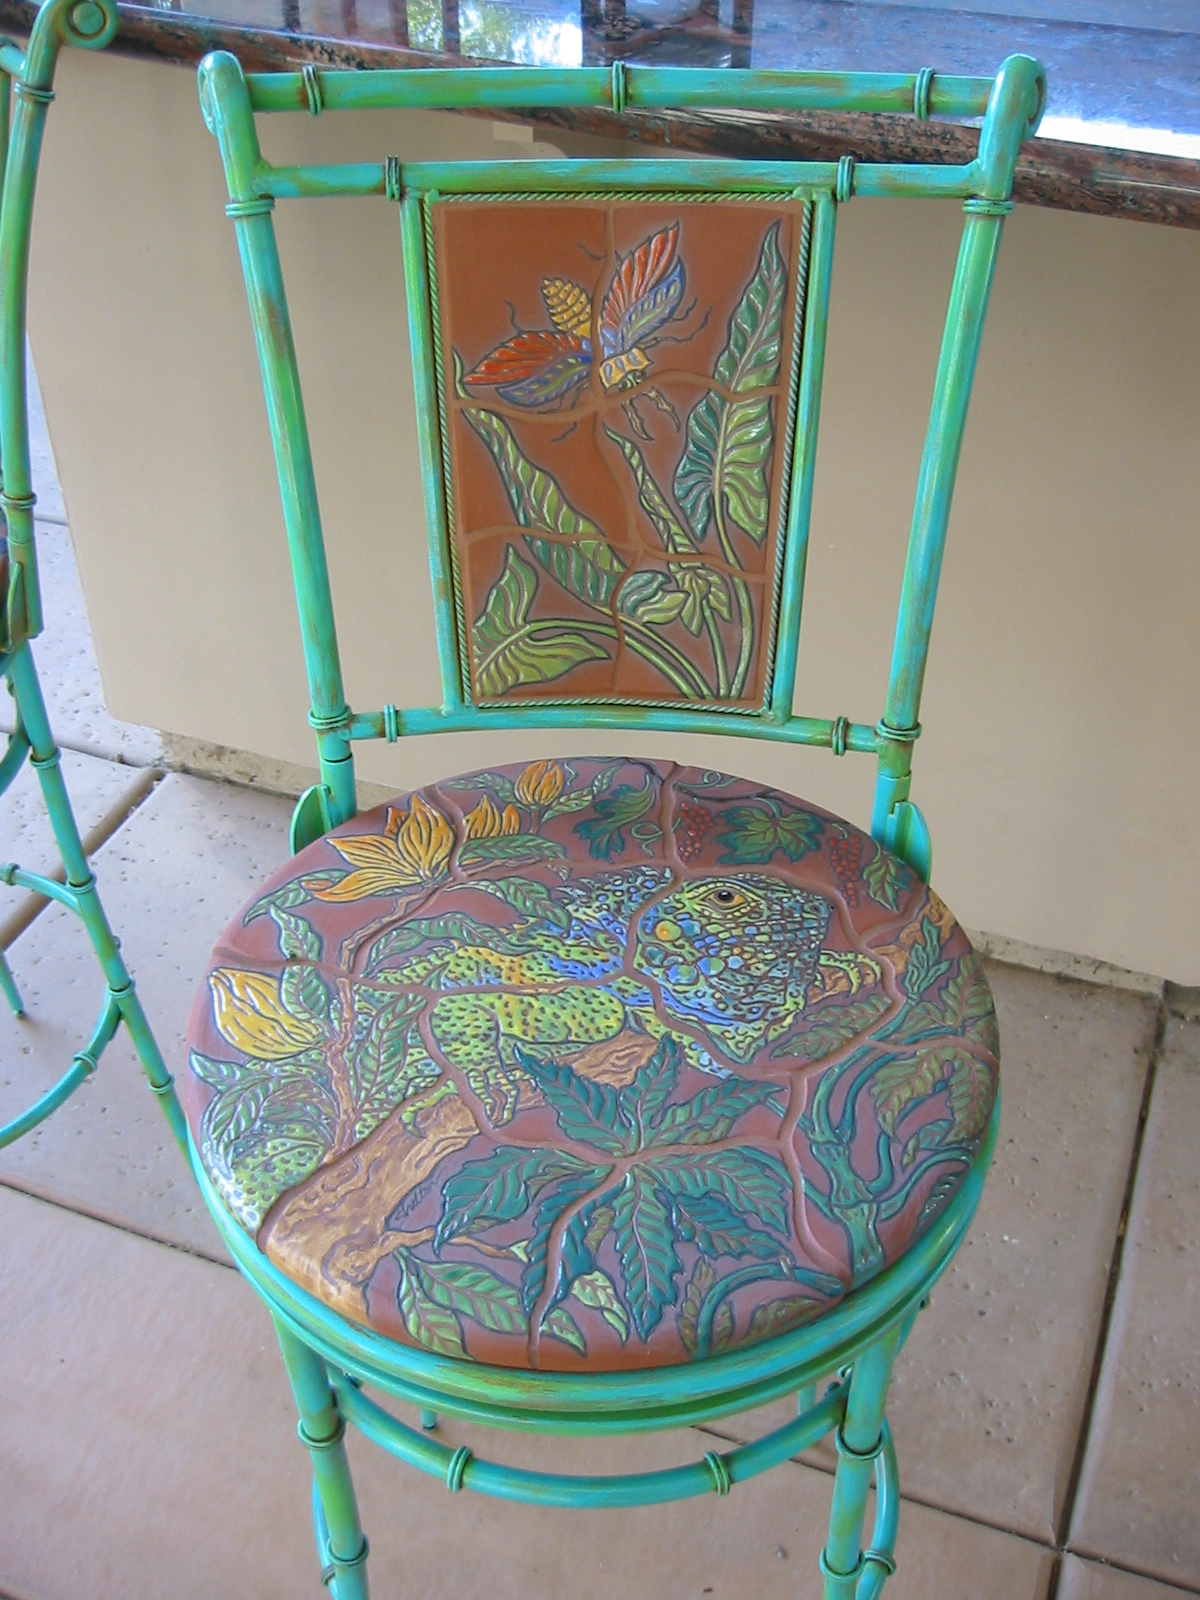 Colorful Ceramic Barstool with Tropical Iguana Design